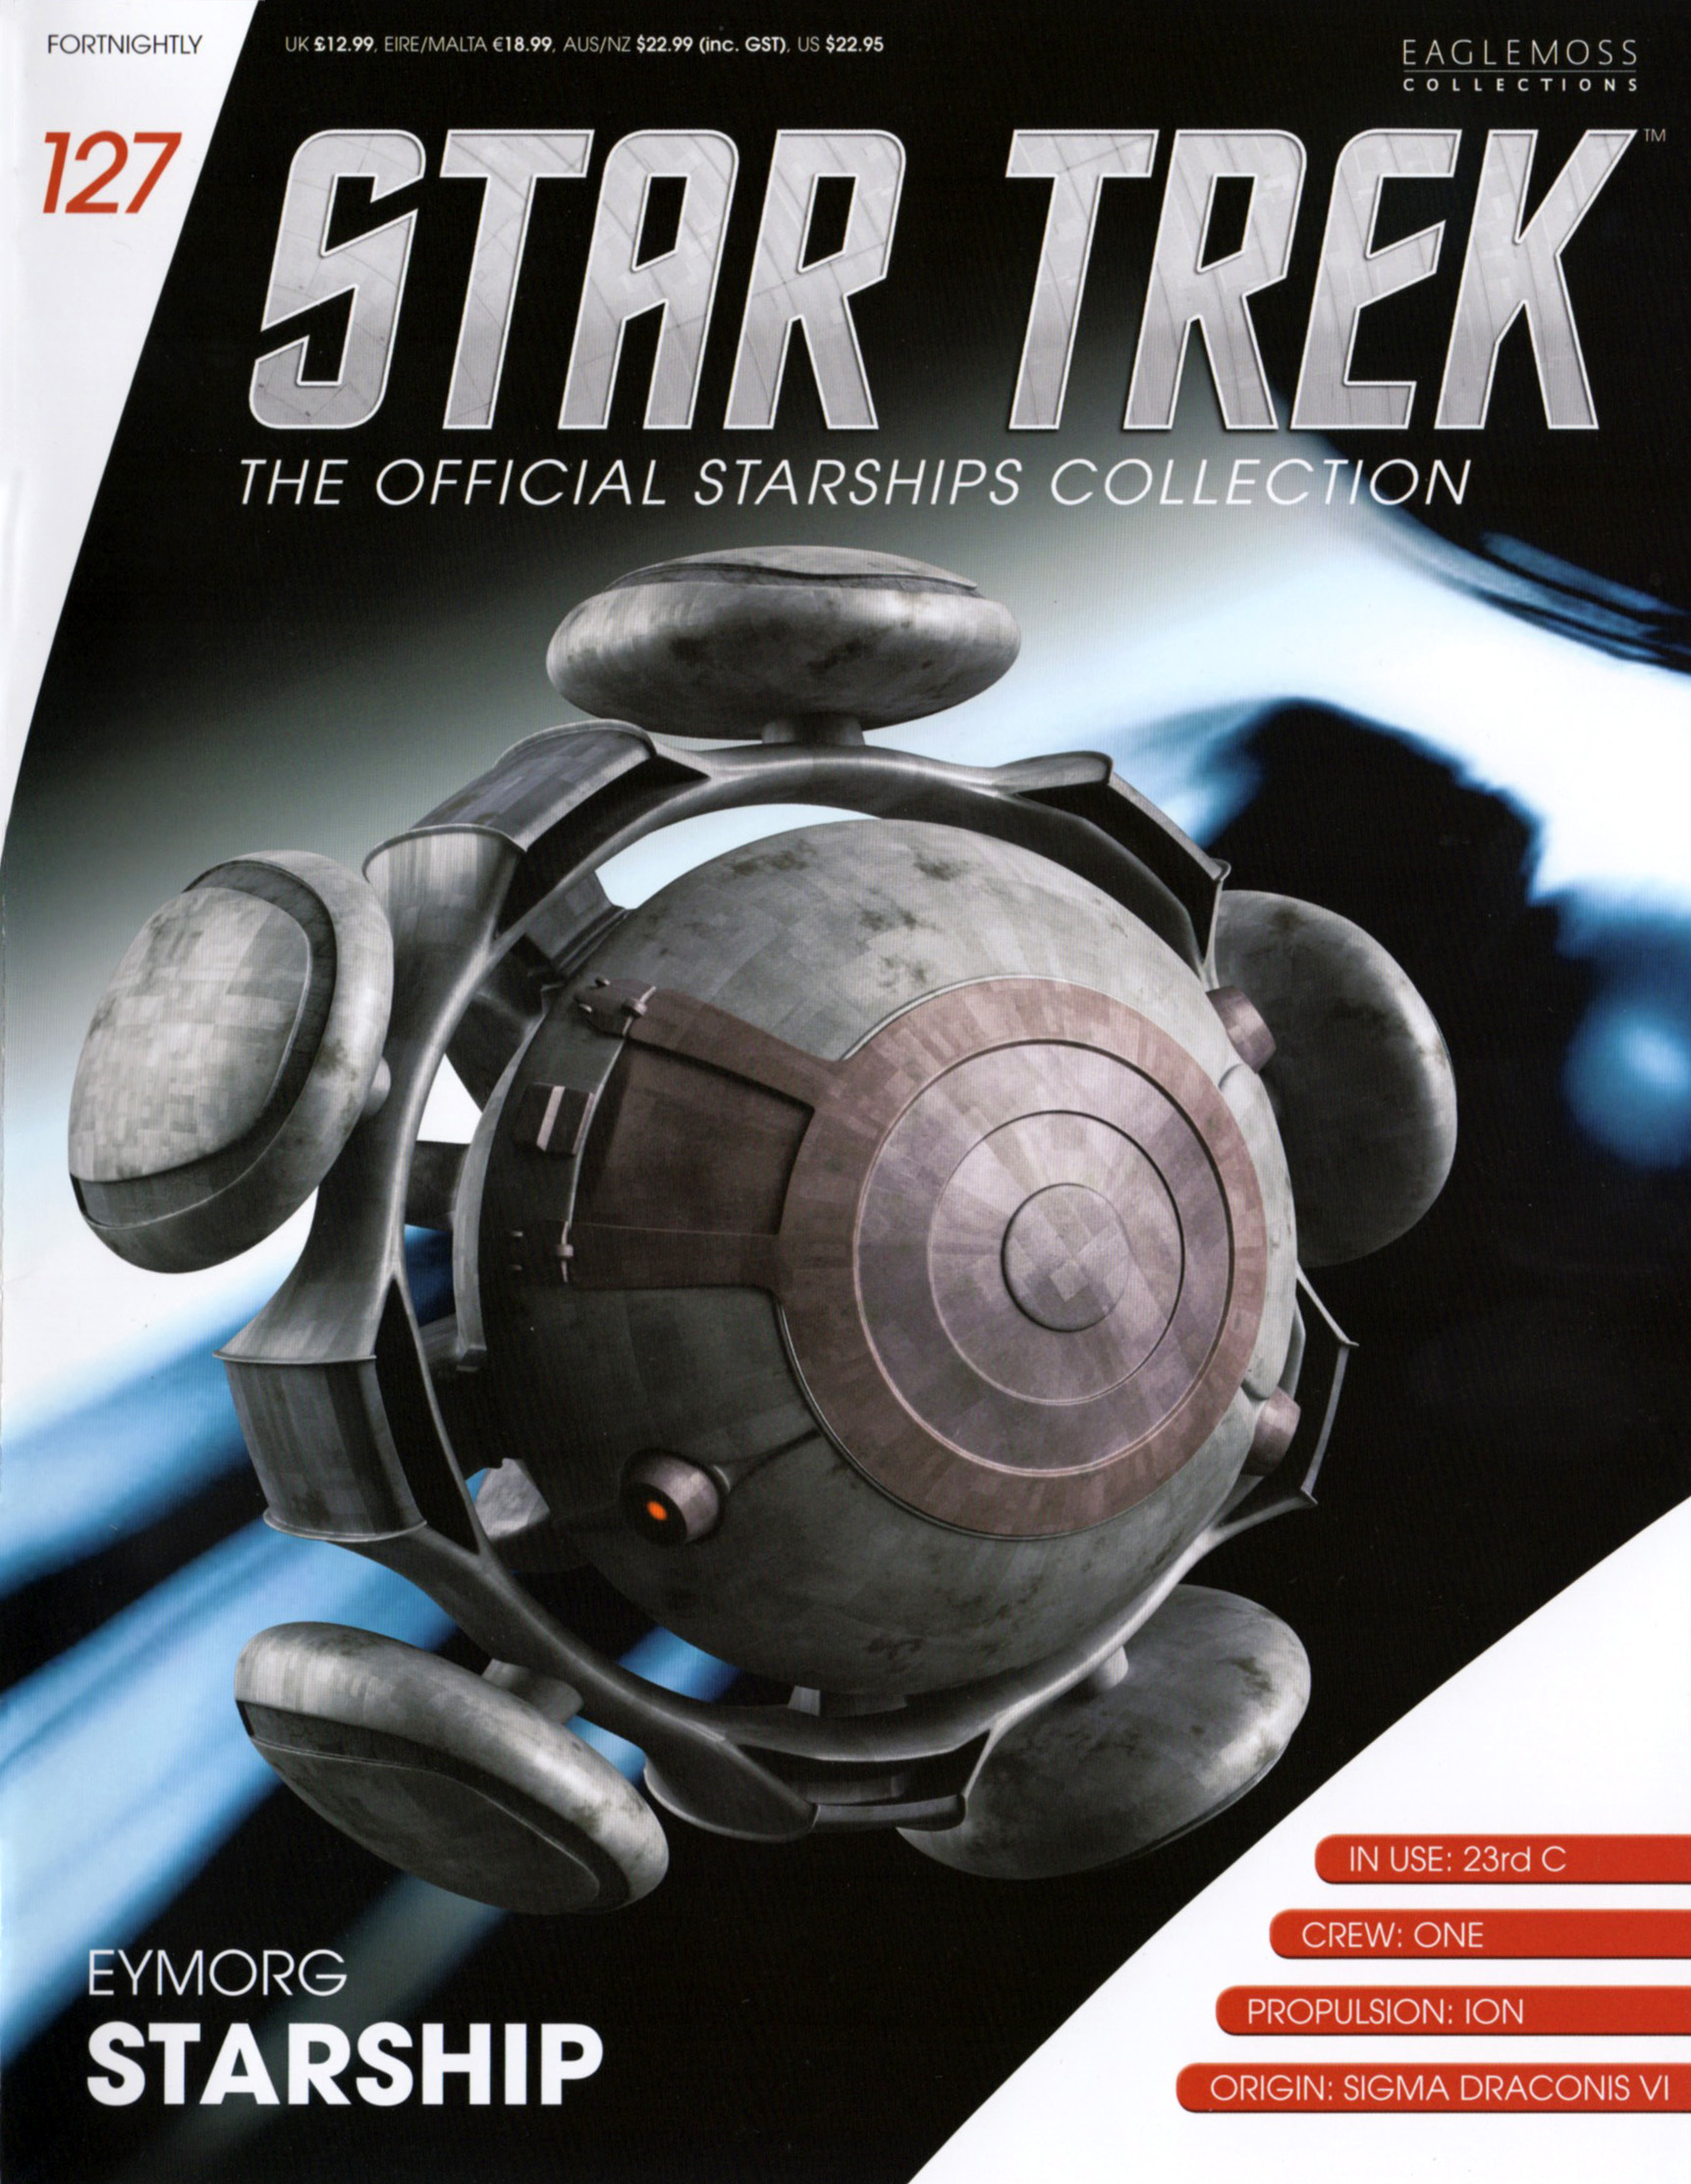 Star Trek Eaglemoss Issue 127 EYMORG STARSHIP  model with Magazine